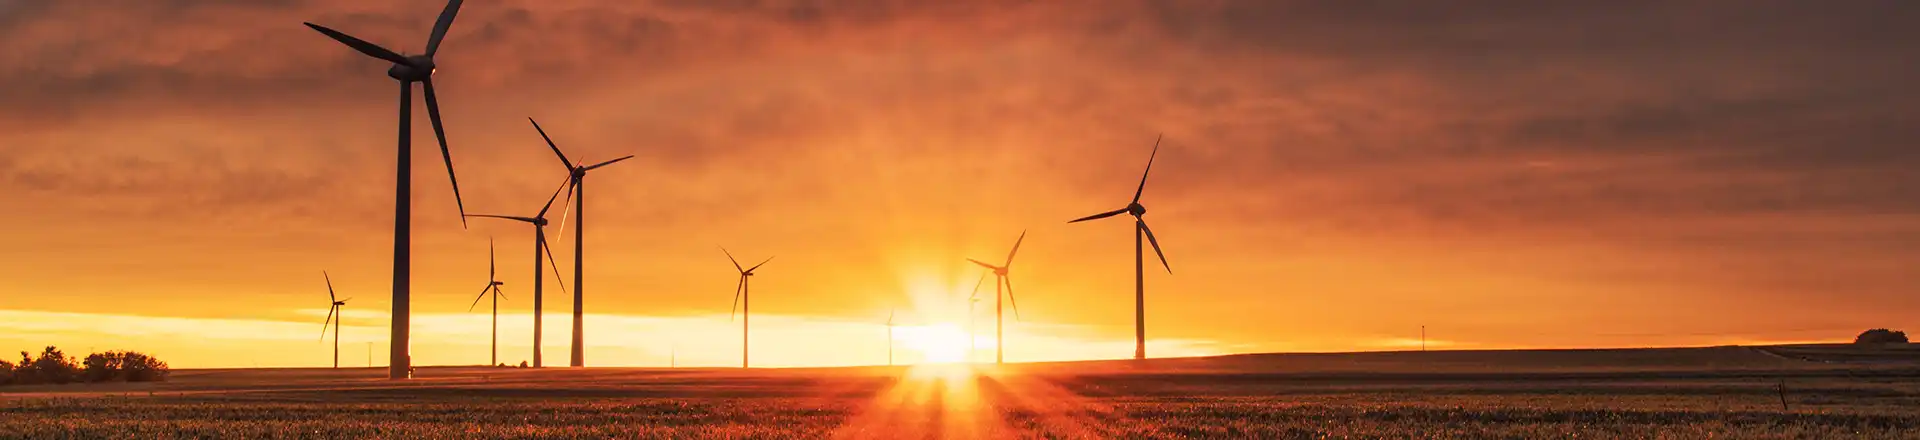 wind turbines with sun setting